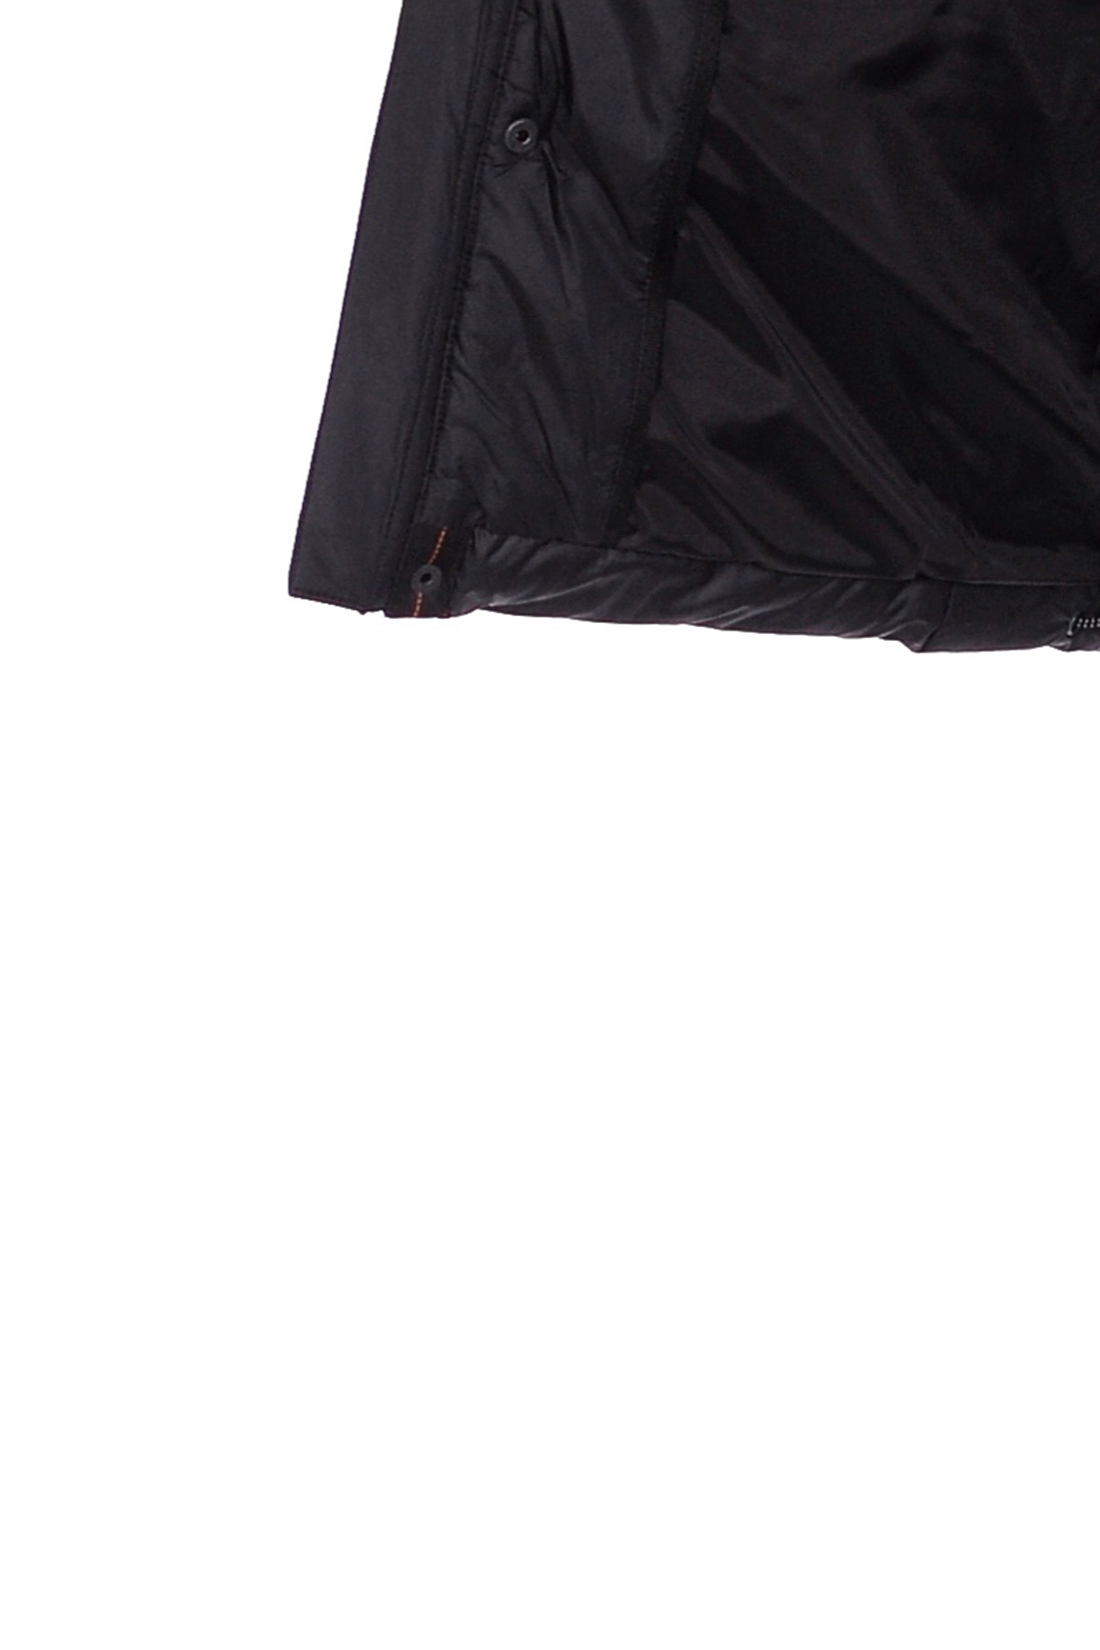 Пуховик с карманами (арт. baon B509506), размер XXL, цвет черный Пуховик с карманами (арт. baon B509506) - фото 3